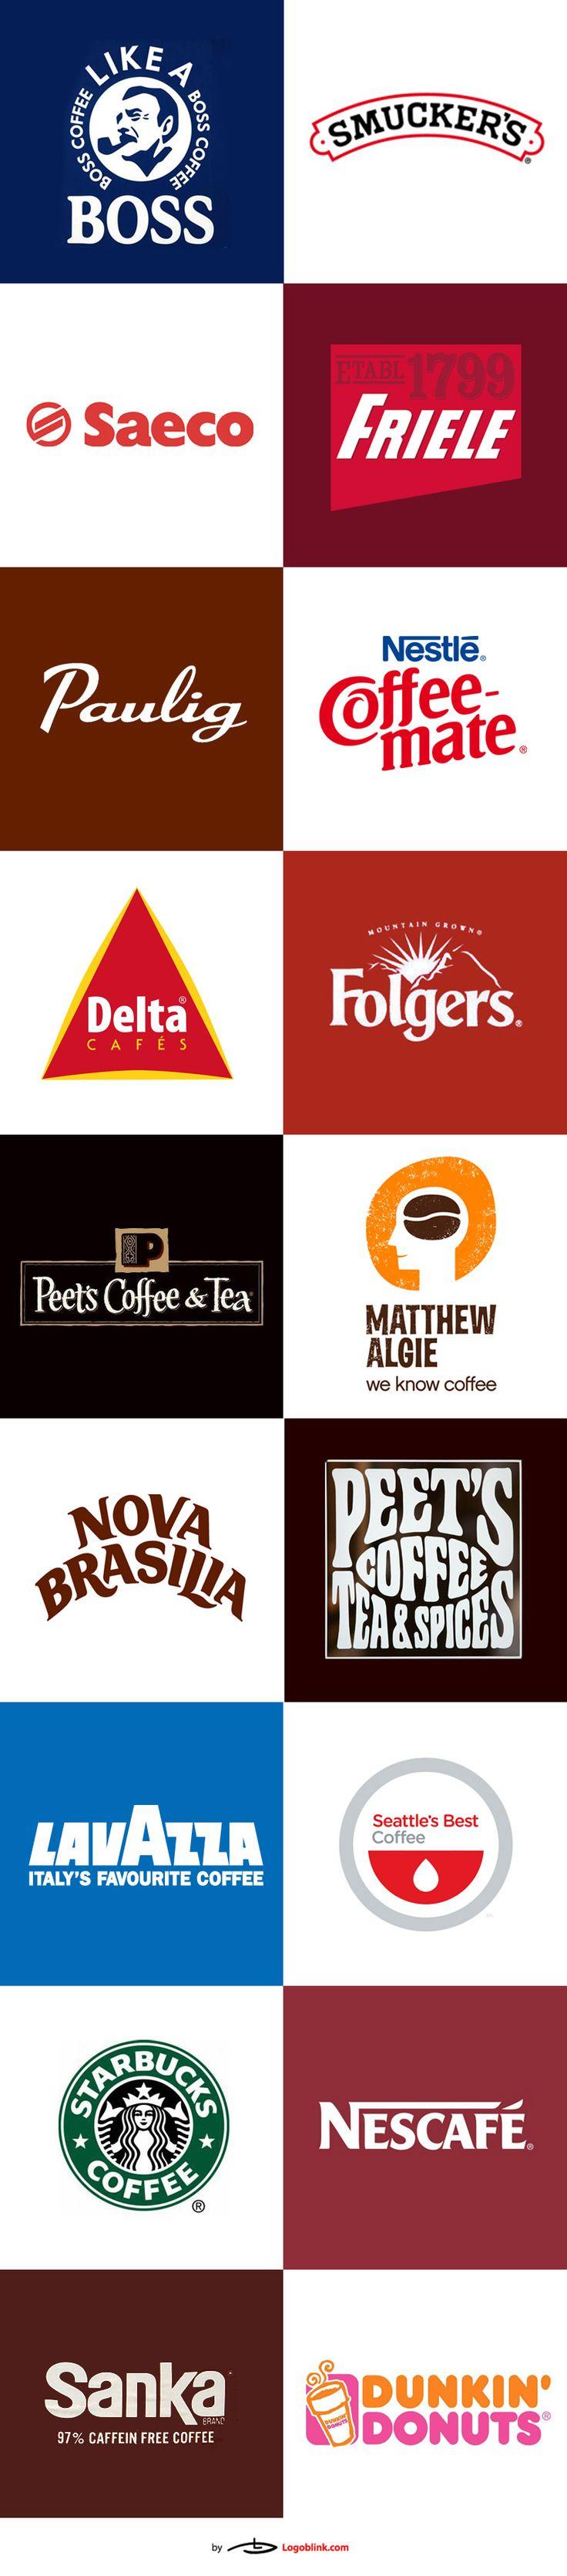 Popular Coffee Logo - 36 Famous coffee logos from around the world - Logoblink.com